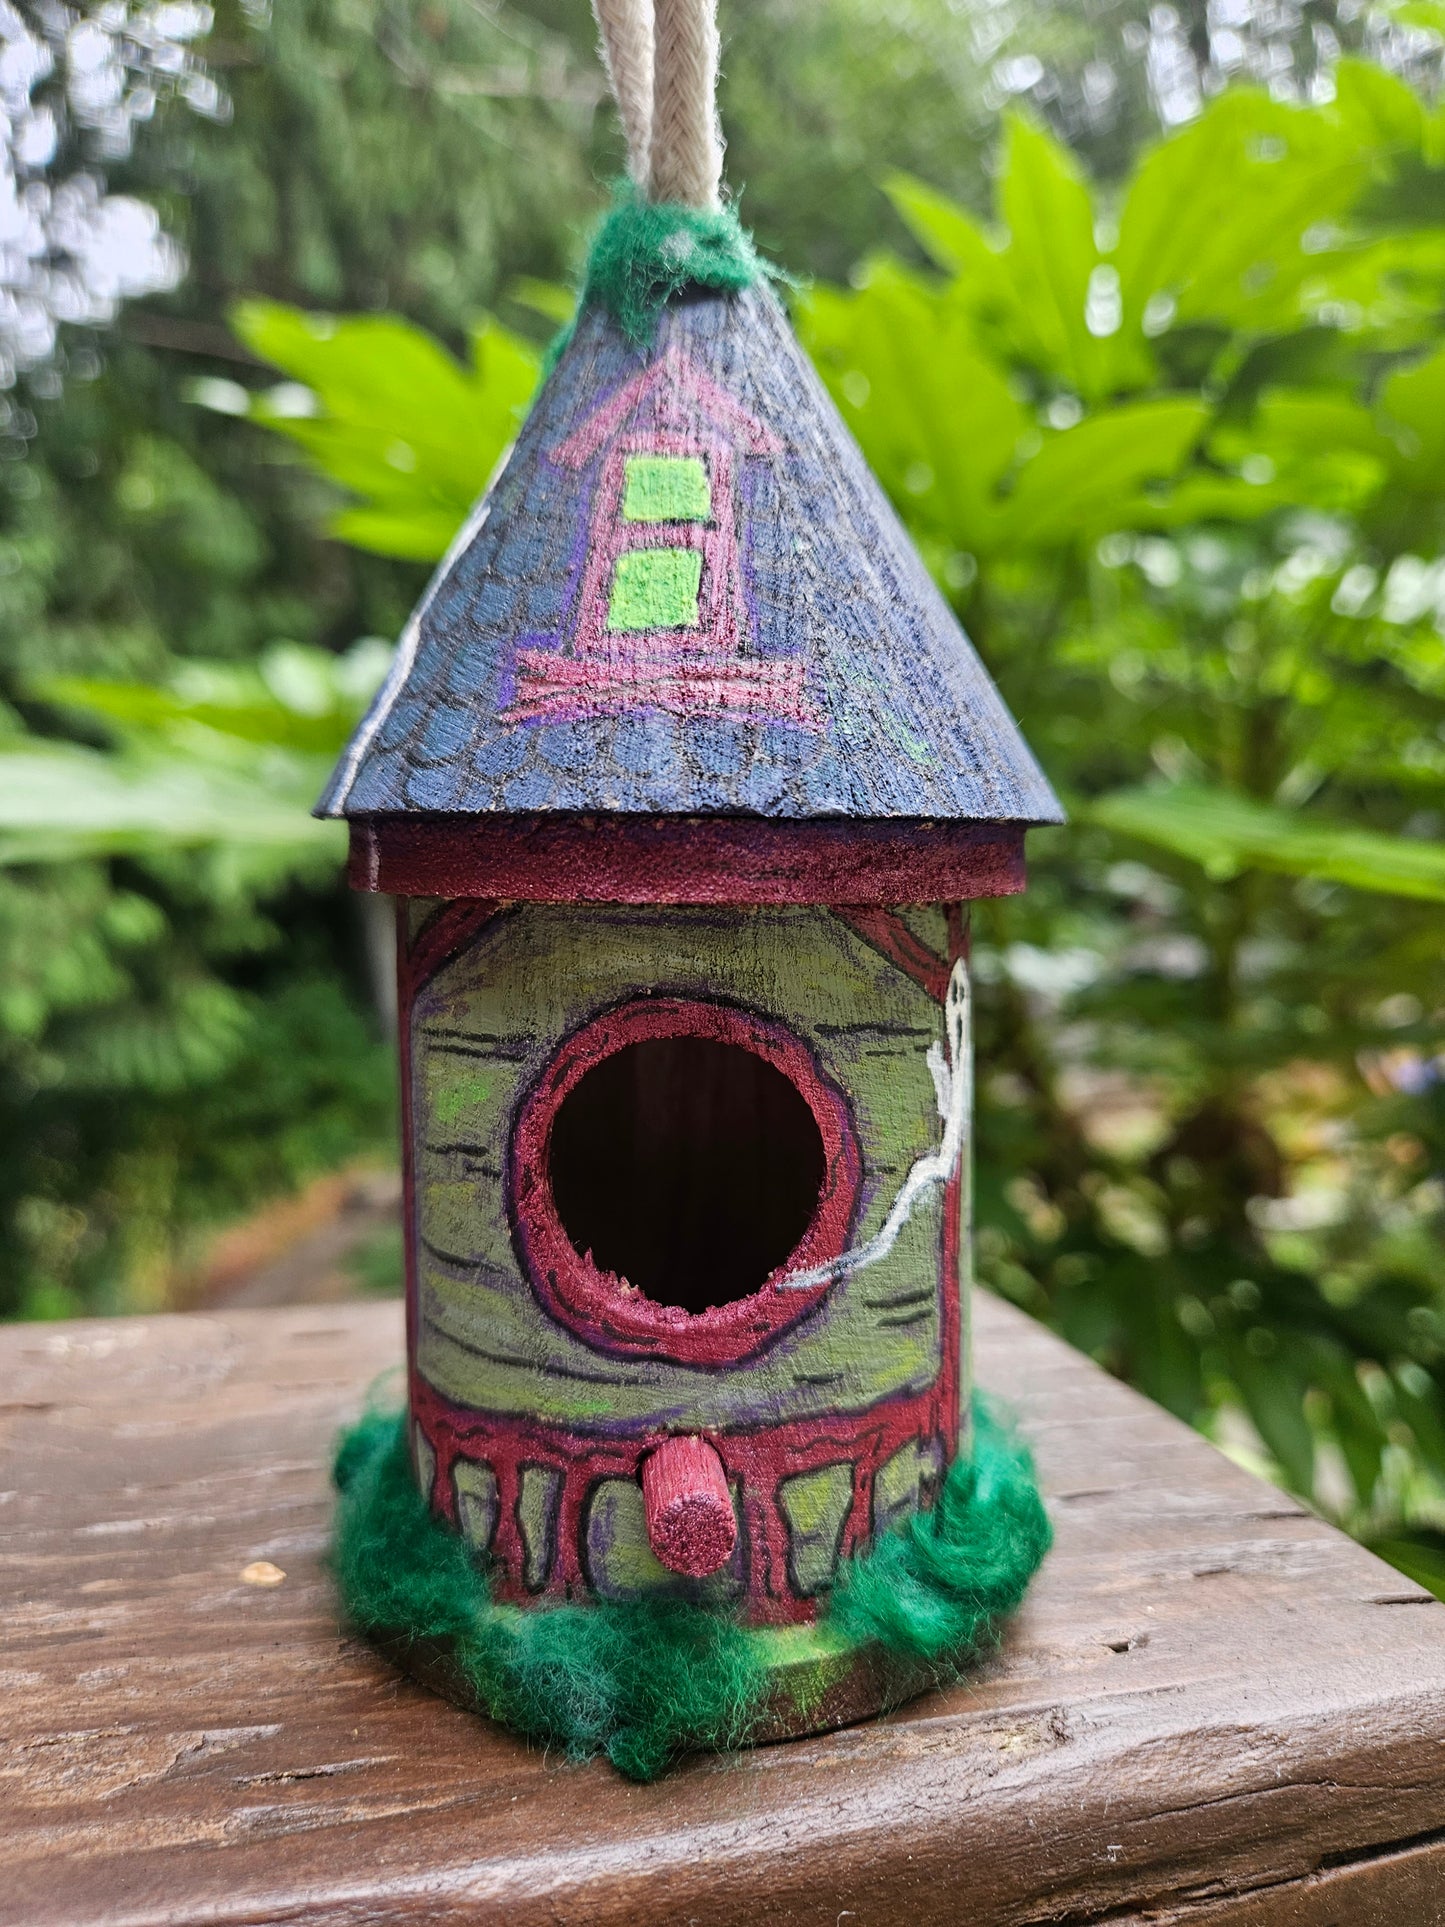 Haunted Birdhouse